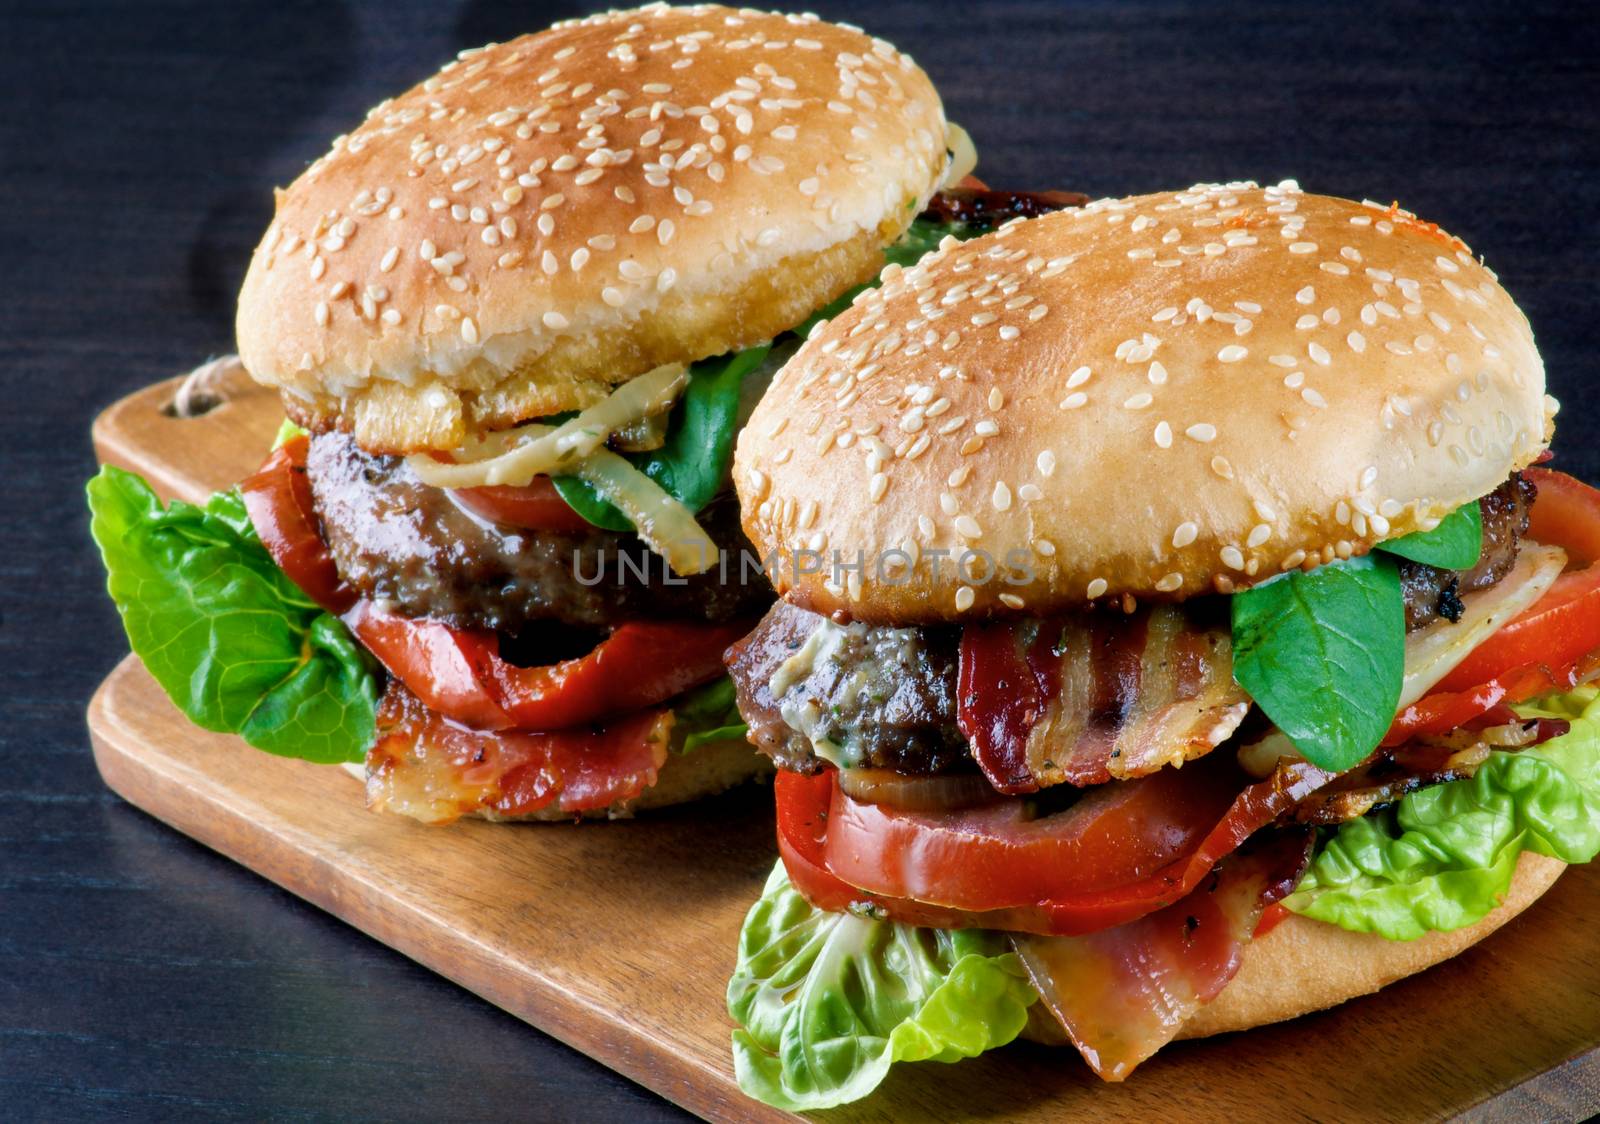 Two Tasty Hamburgers by zhekos